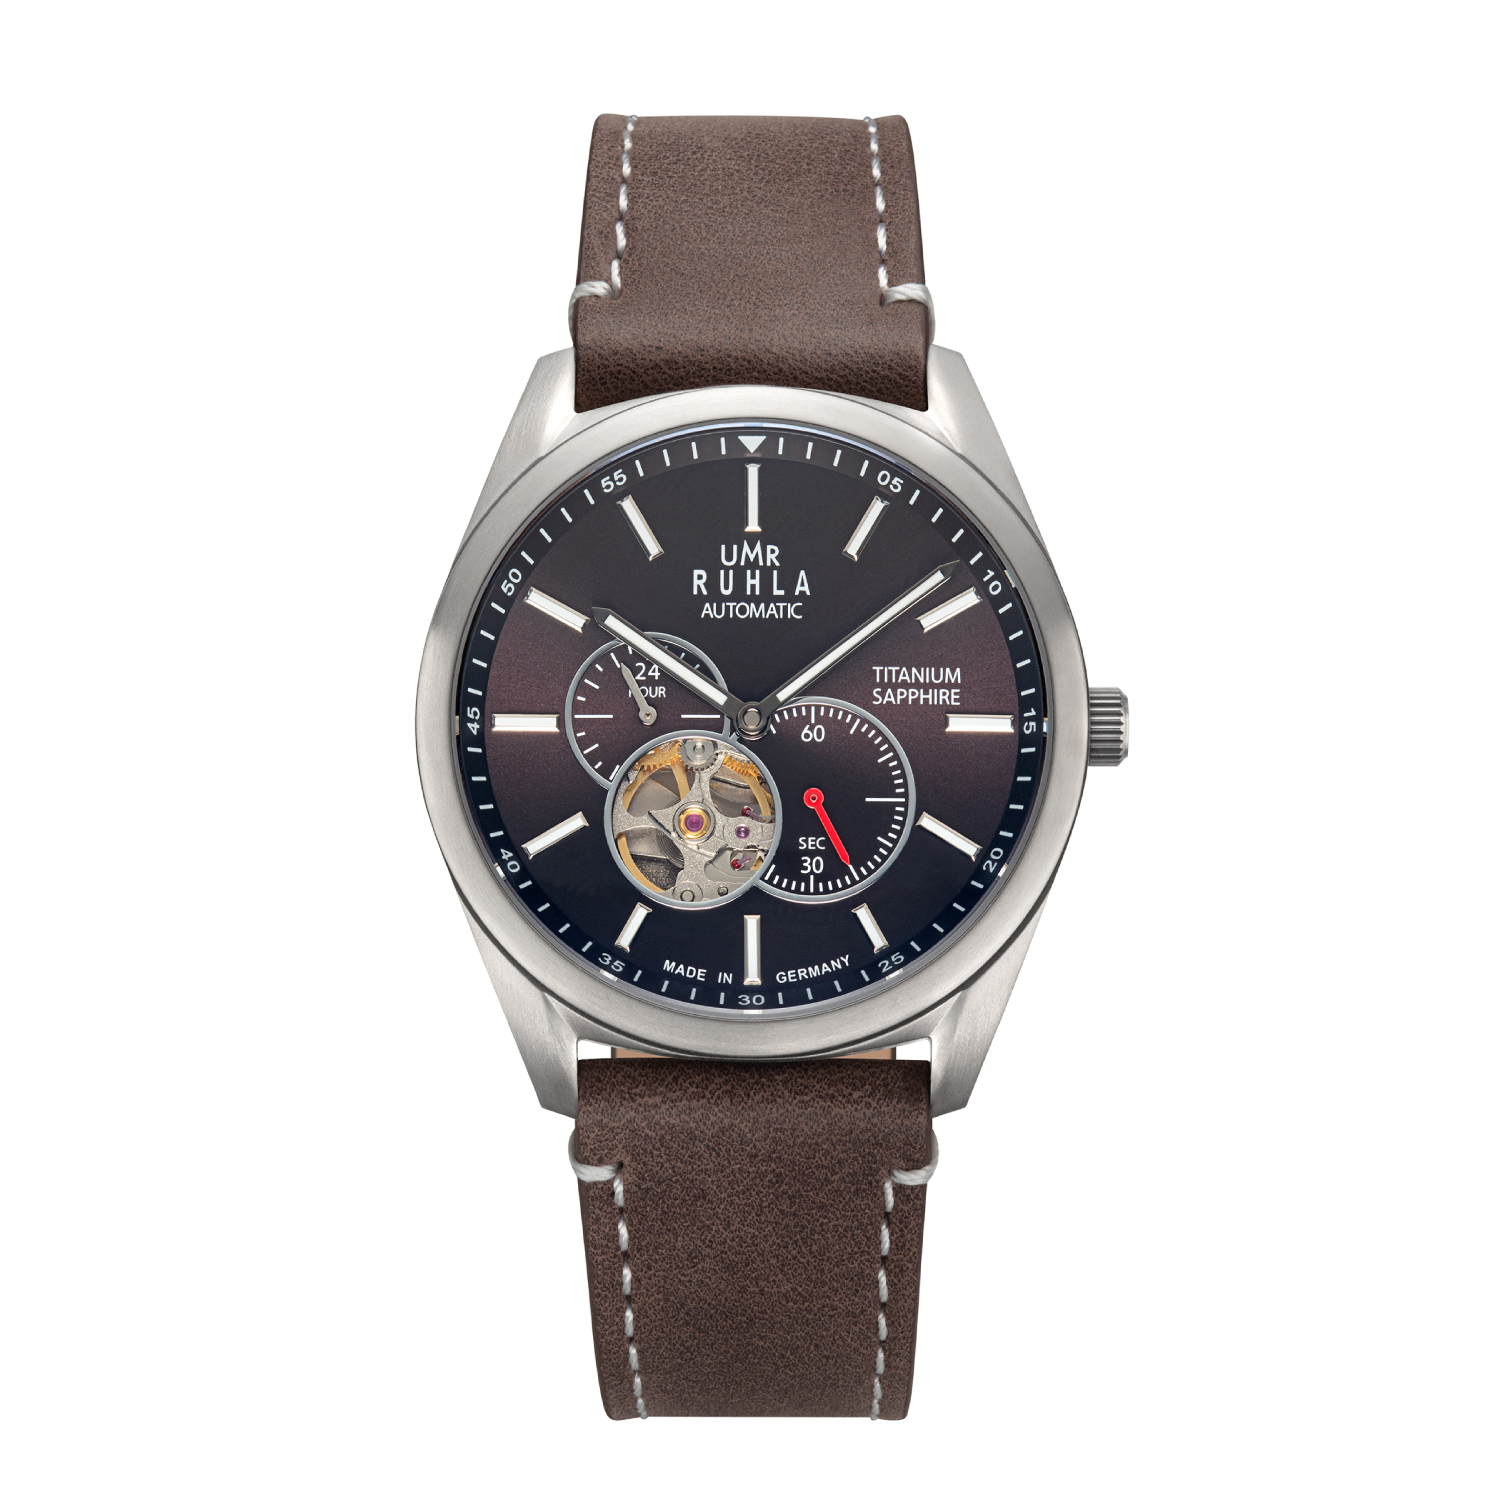 Uhren Manufaktur Ruhla - automatic wristwatch - brown leather strap